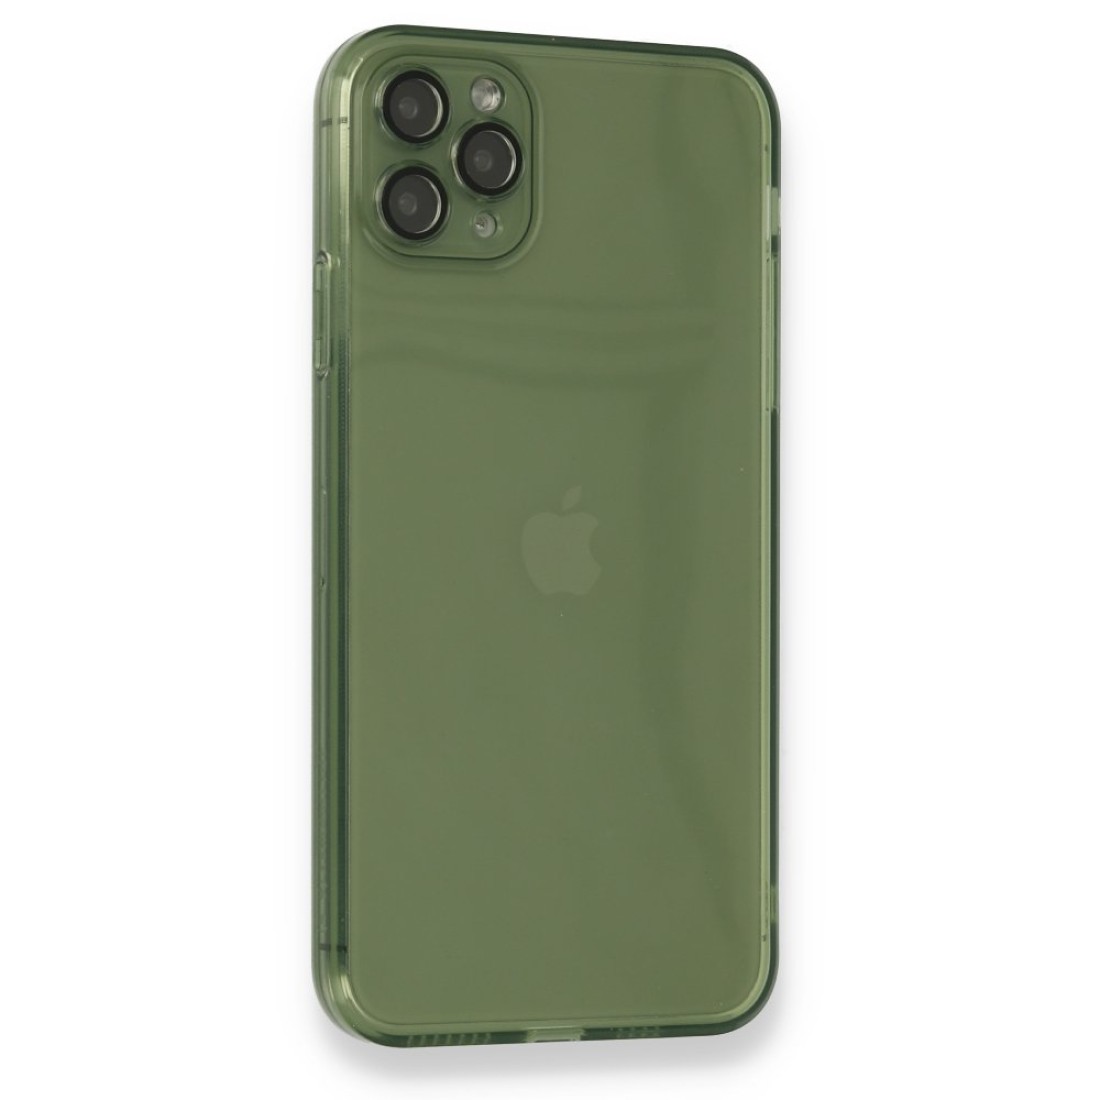 Apple iPhone 11 Pro Max Kılıf Fly Lens Silikon - Yeşil